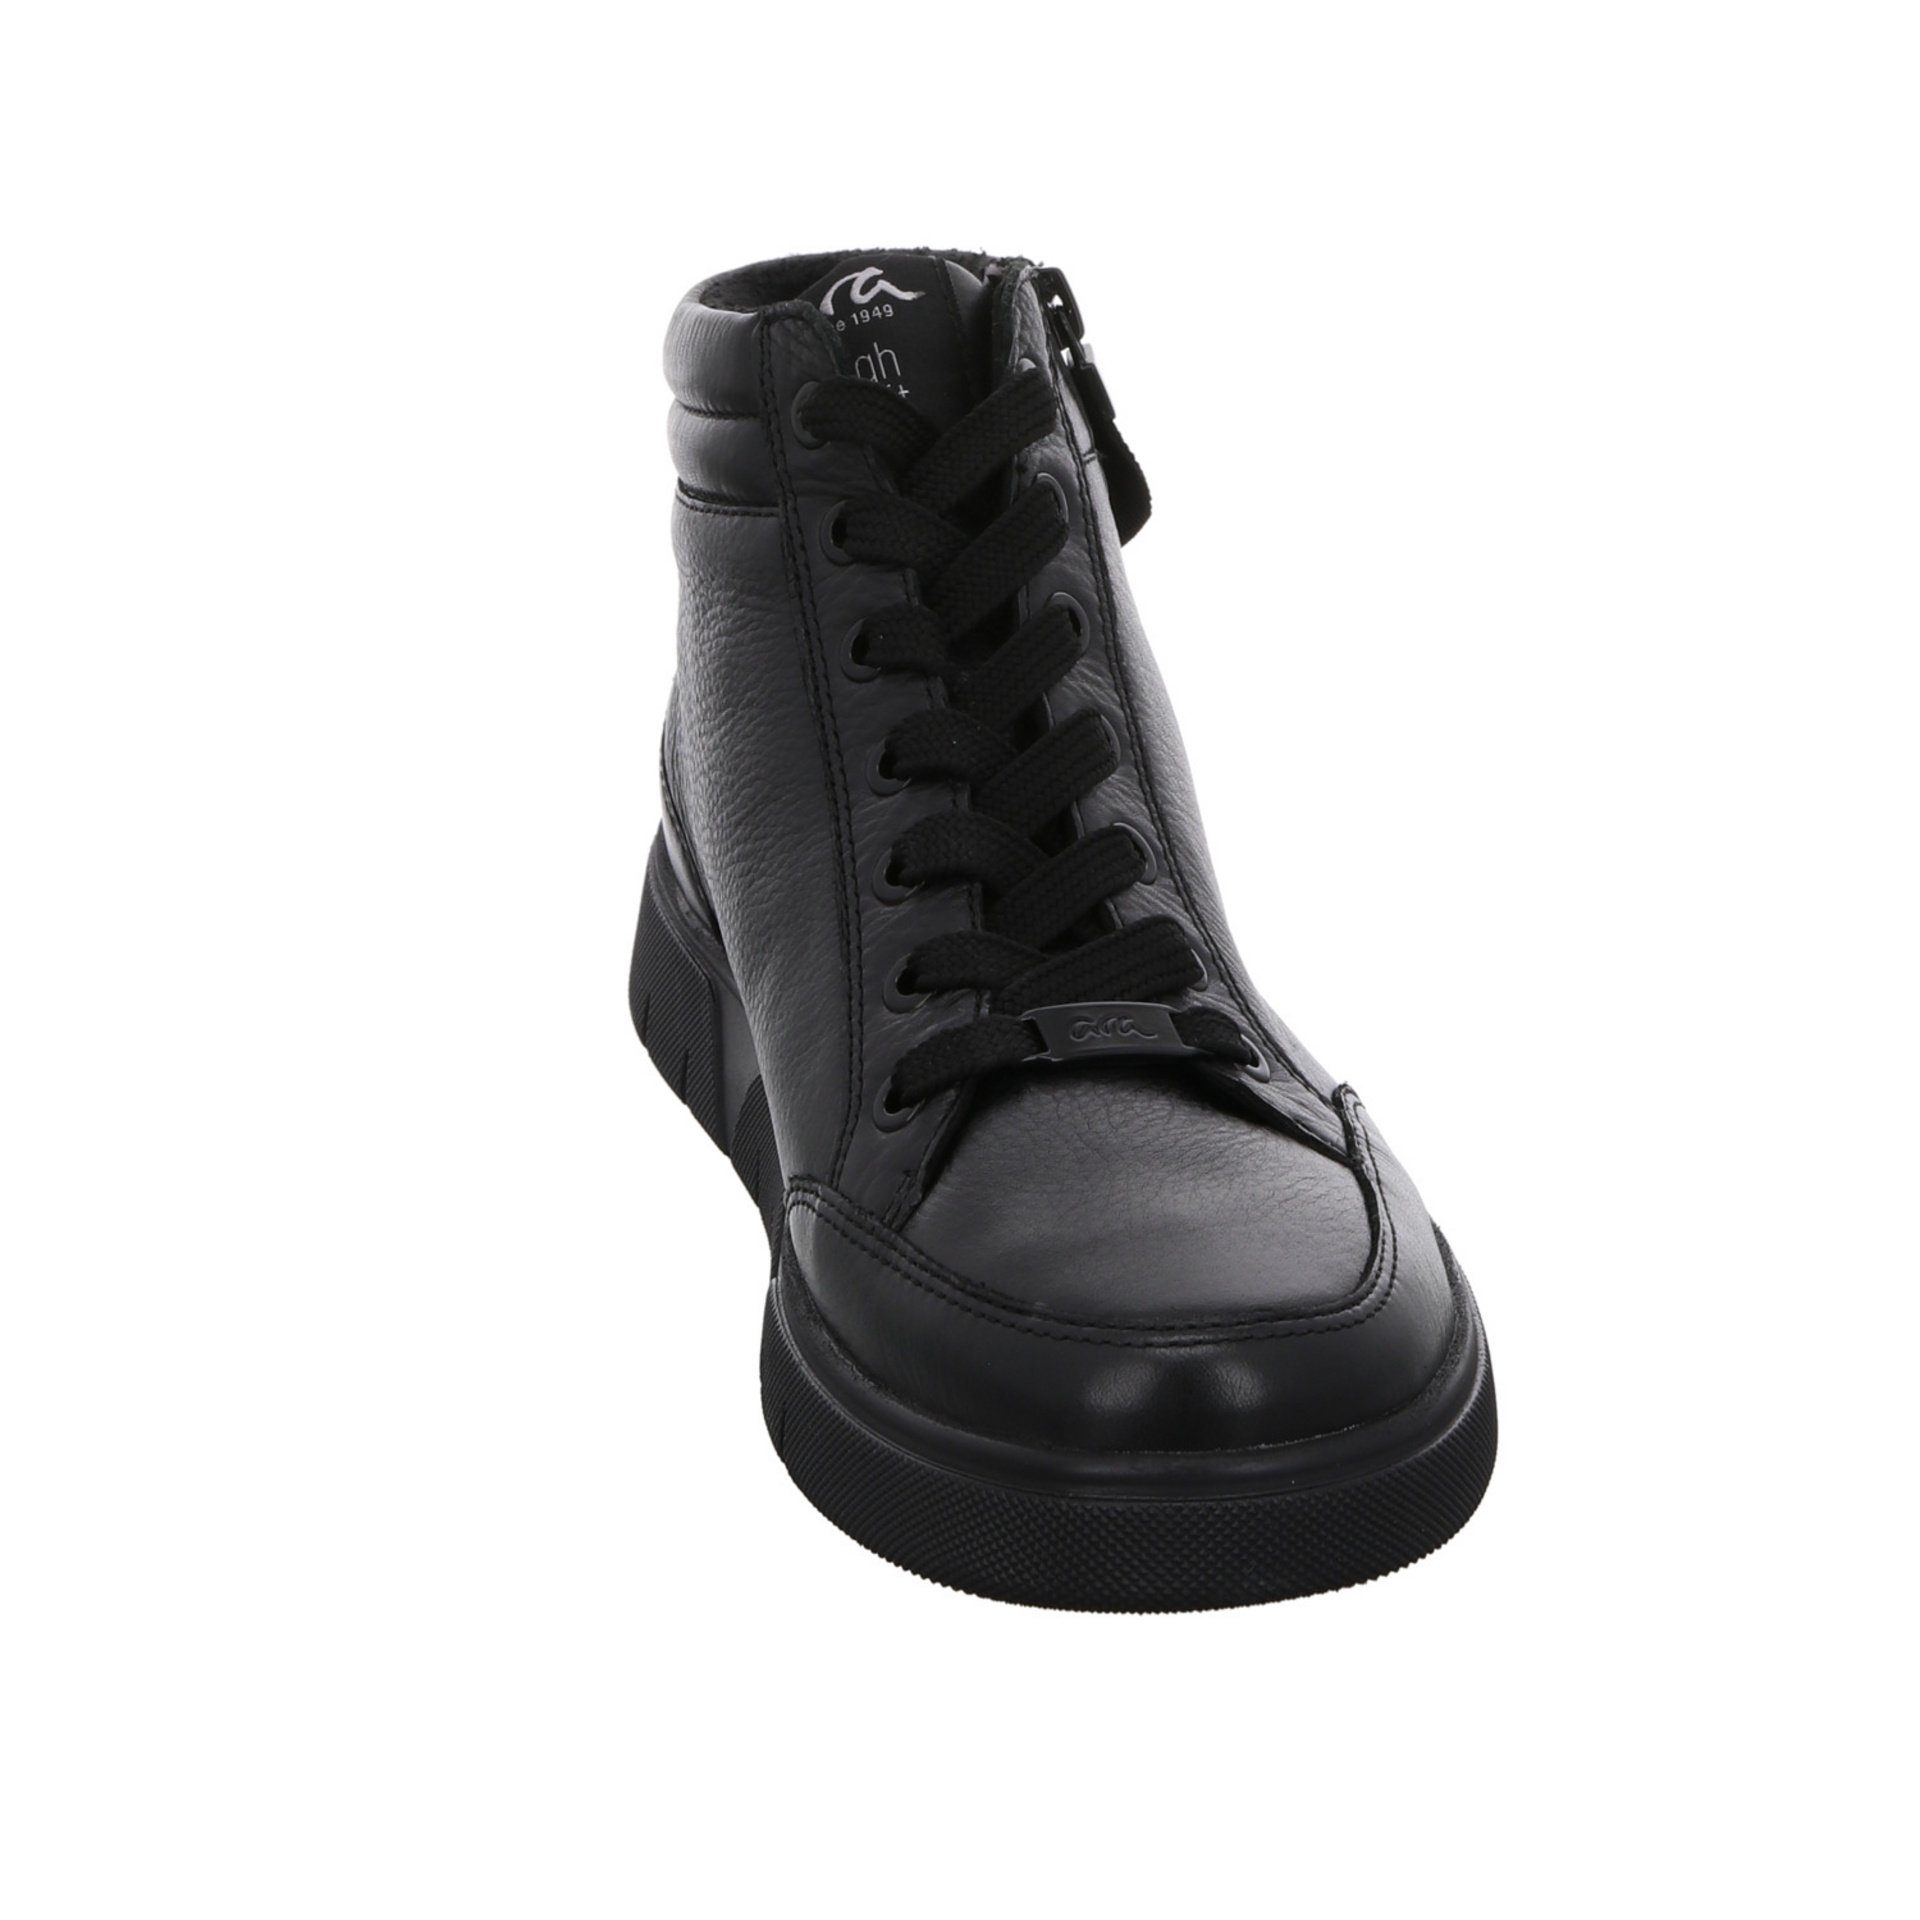 Ara Damen Schuhe 046706 Schnürstiefelette schwarz 2.0 Glattleder Rom-Sport Sneaker Sneaker